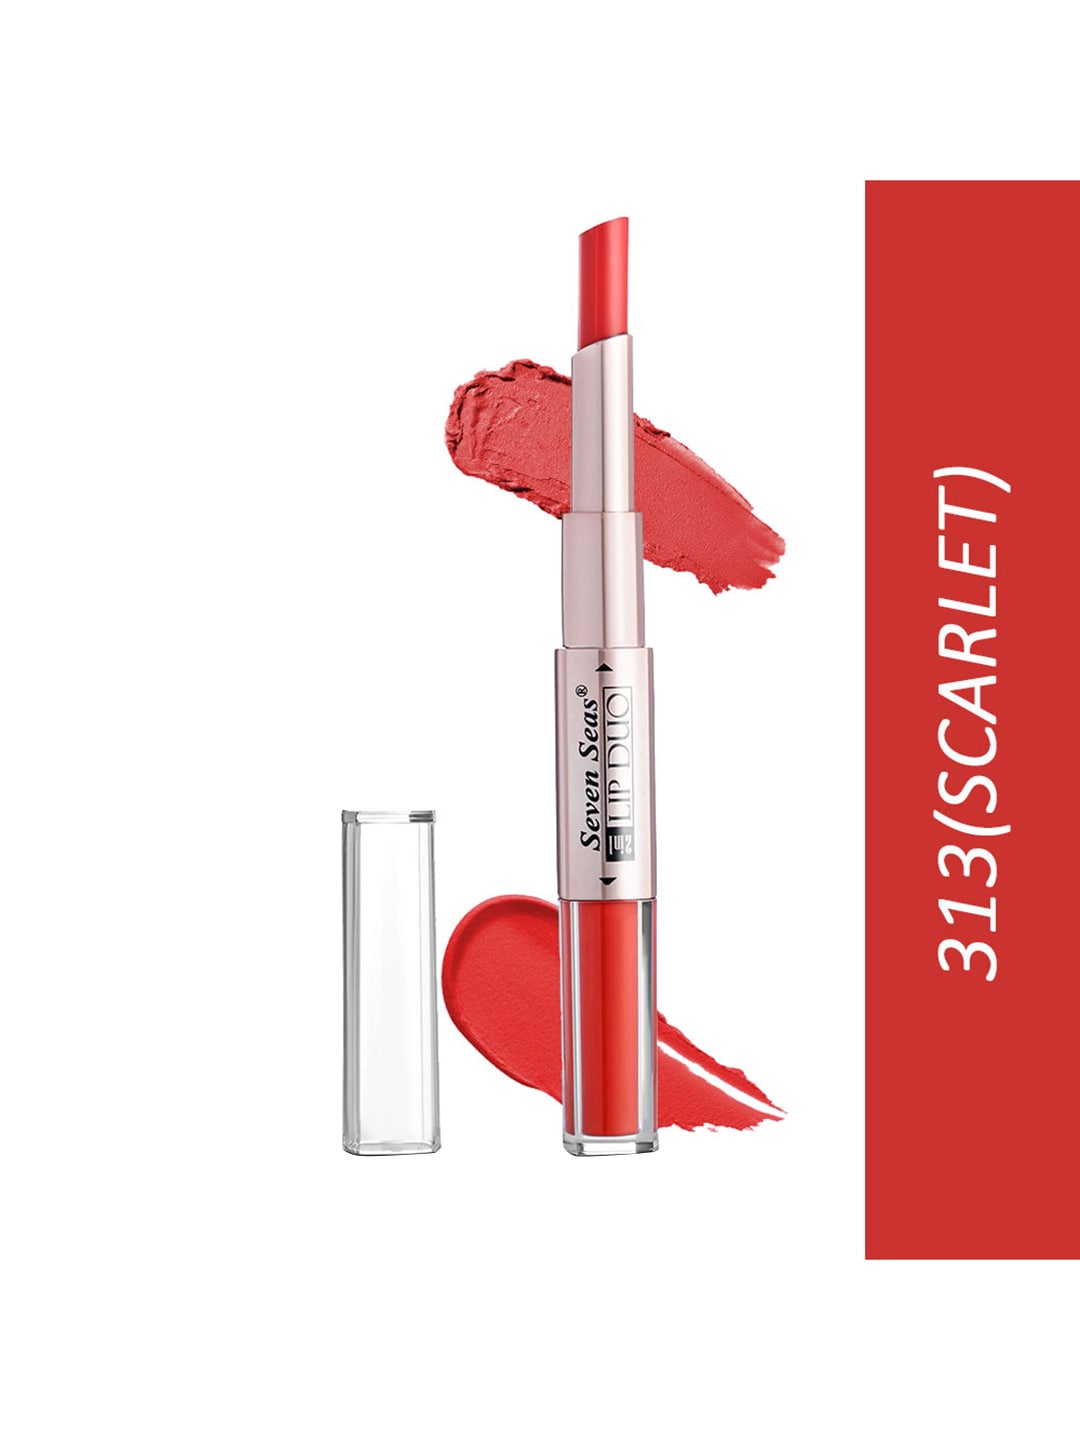 Seven Seas Women Red Lip Duo 2 In 1 Liquid Lipstick With Stick Lipstick Scarlet Price in India